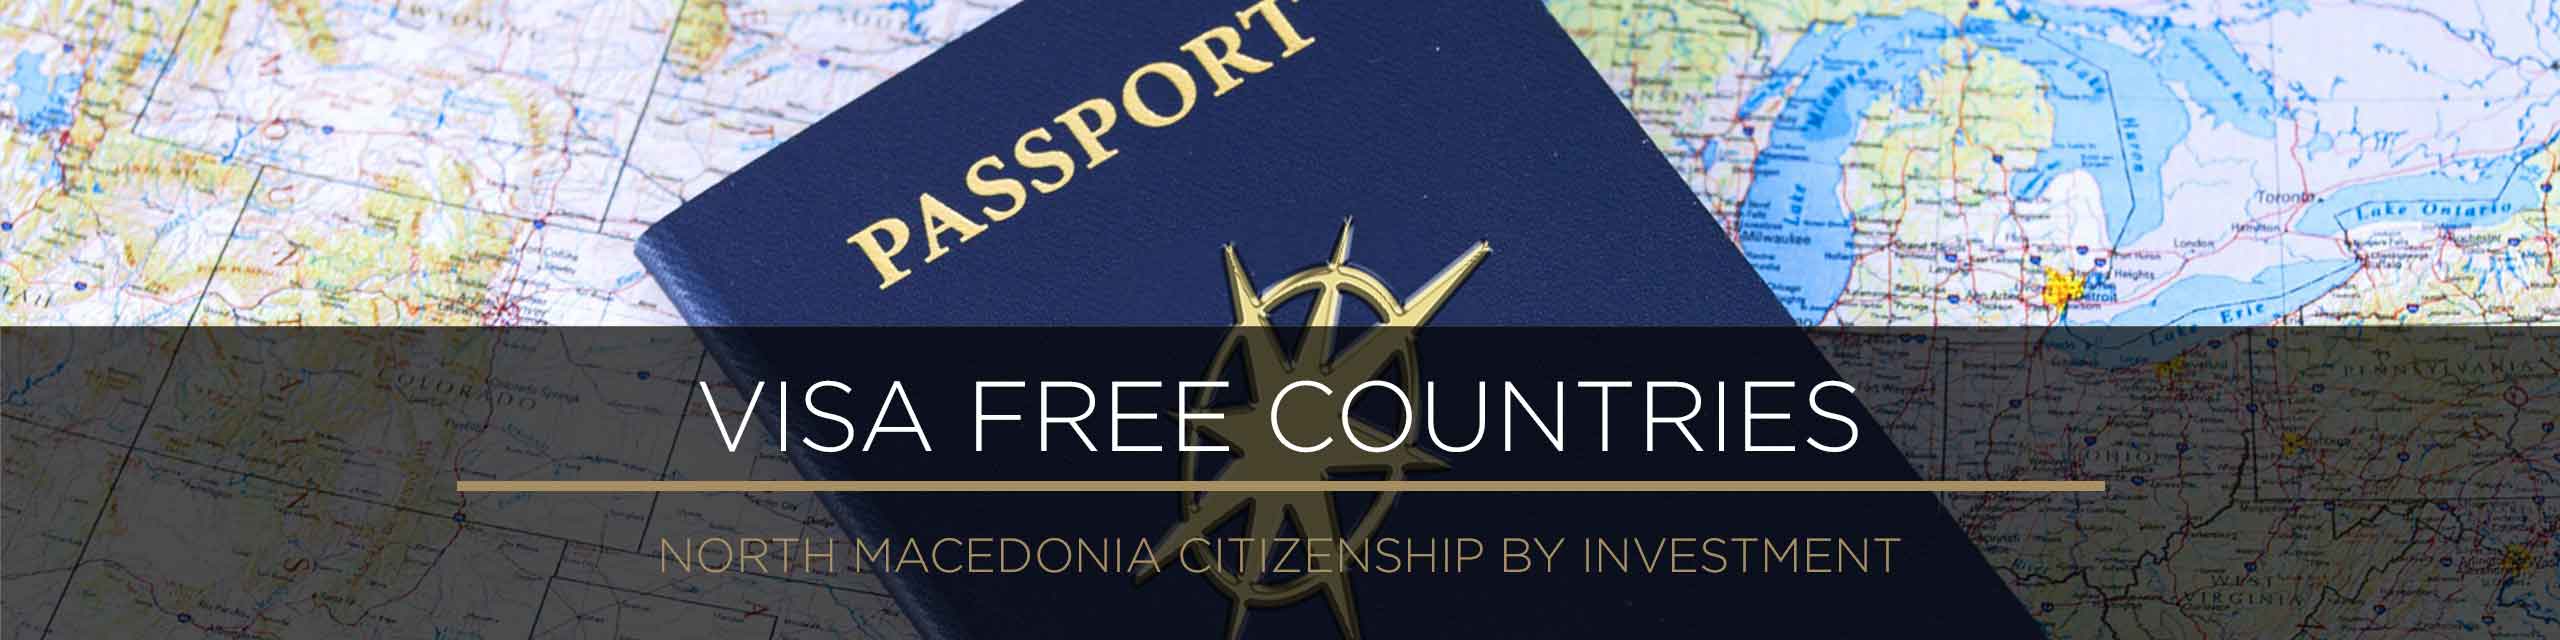 Visa free travel for North Macedonia citizenship program